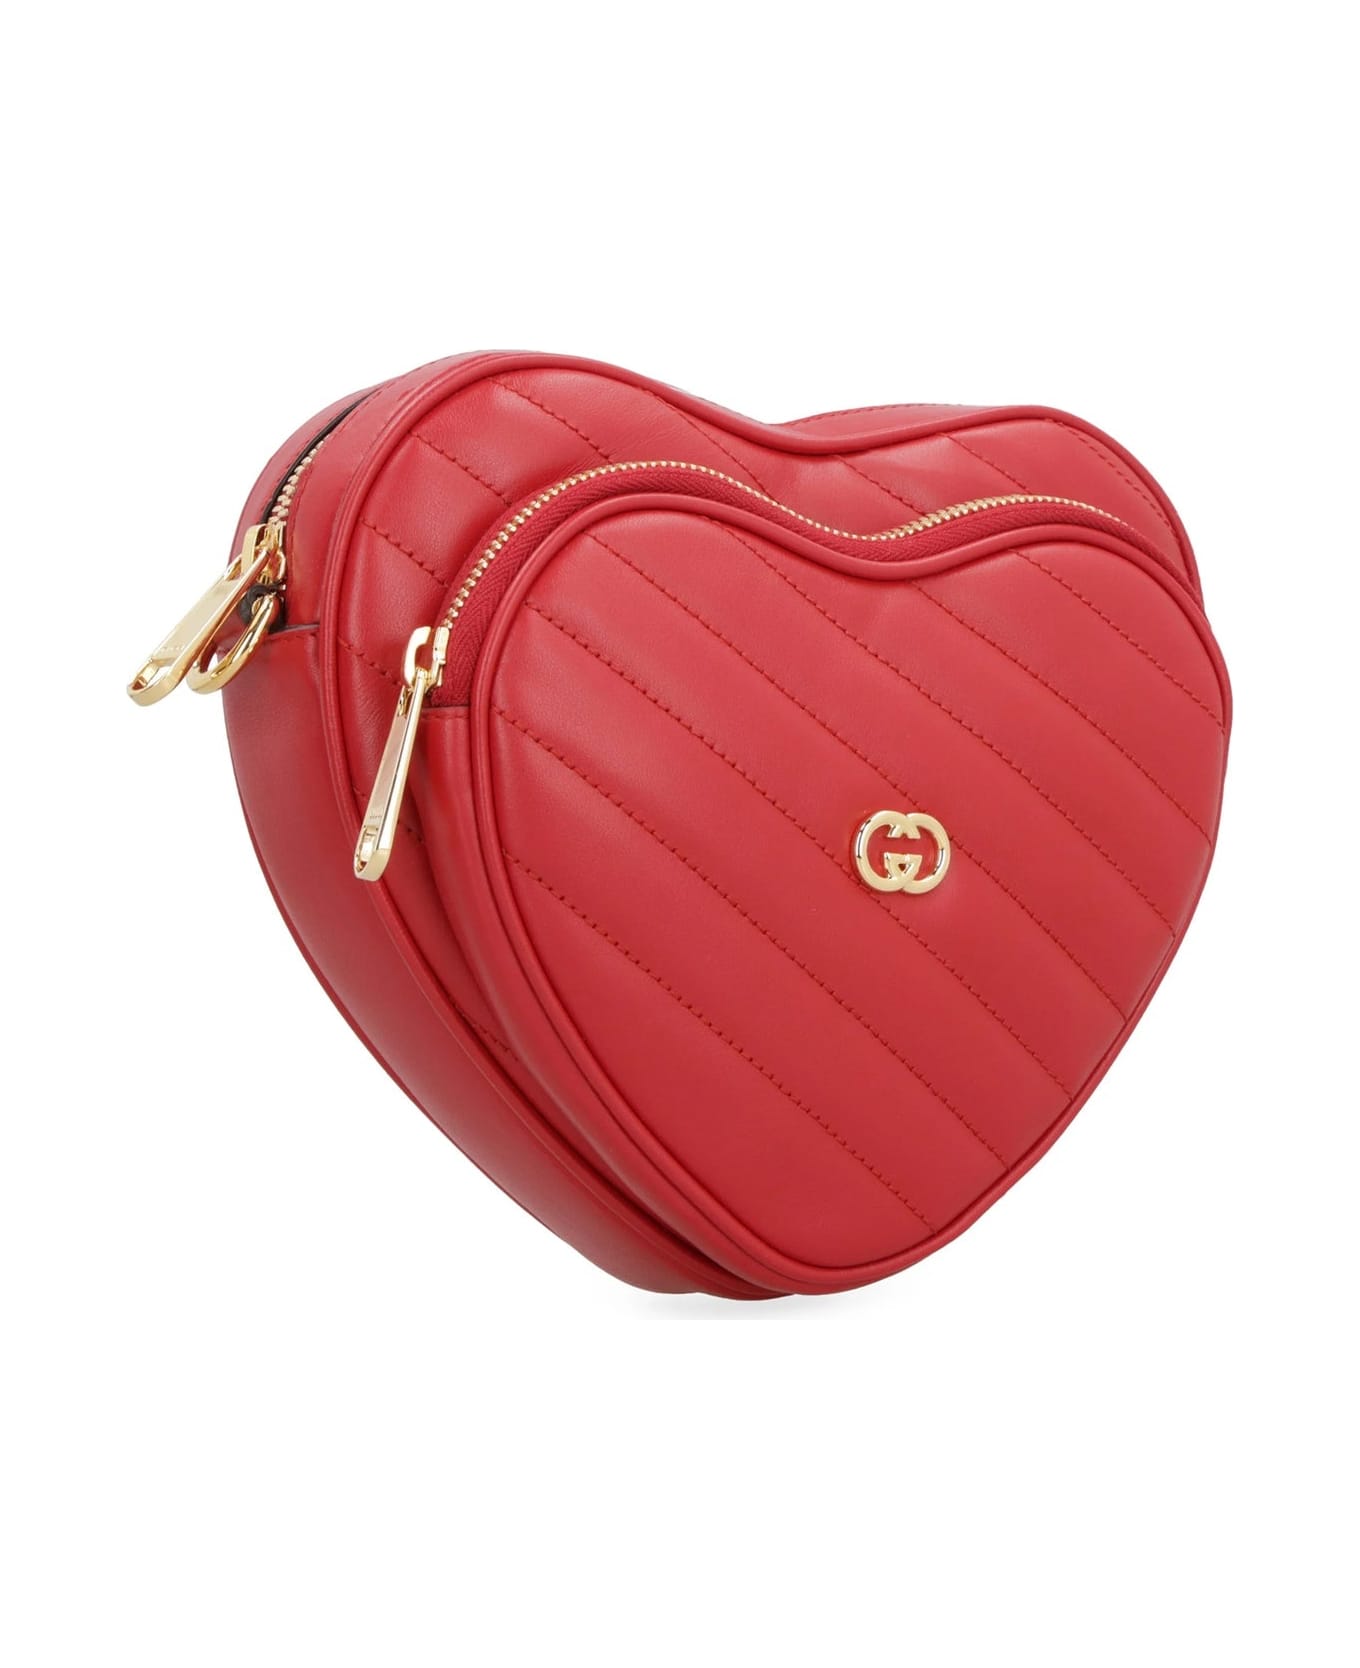 Gucci Heart Shoulder Bag - Red ショルダーバッグ